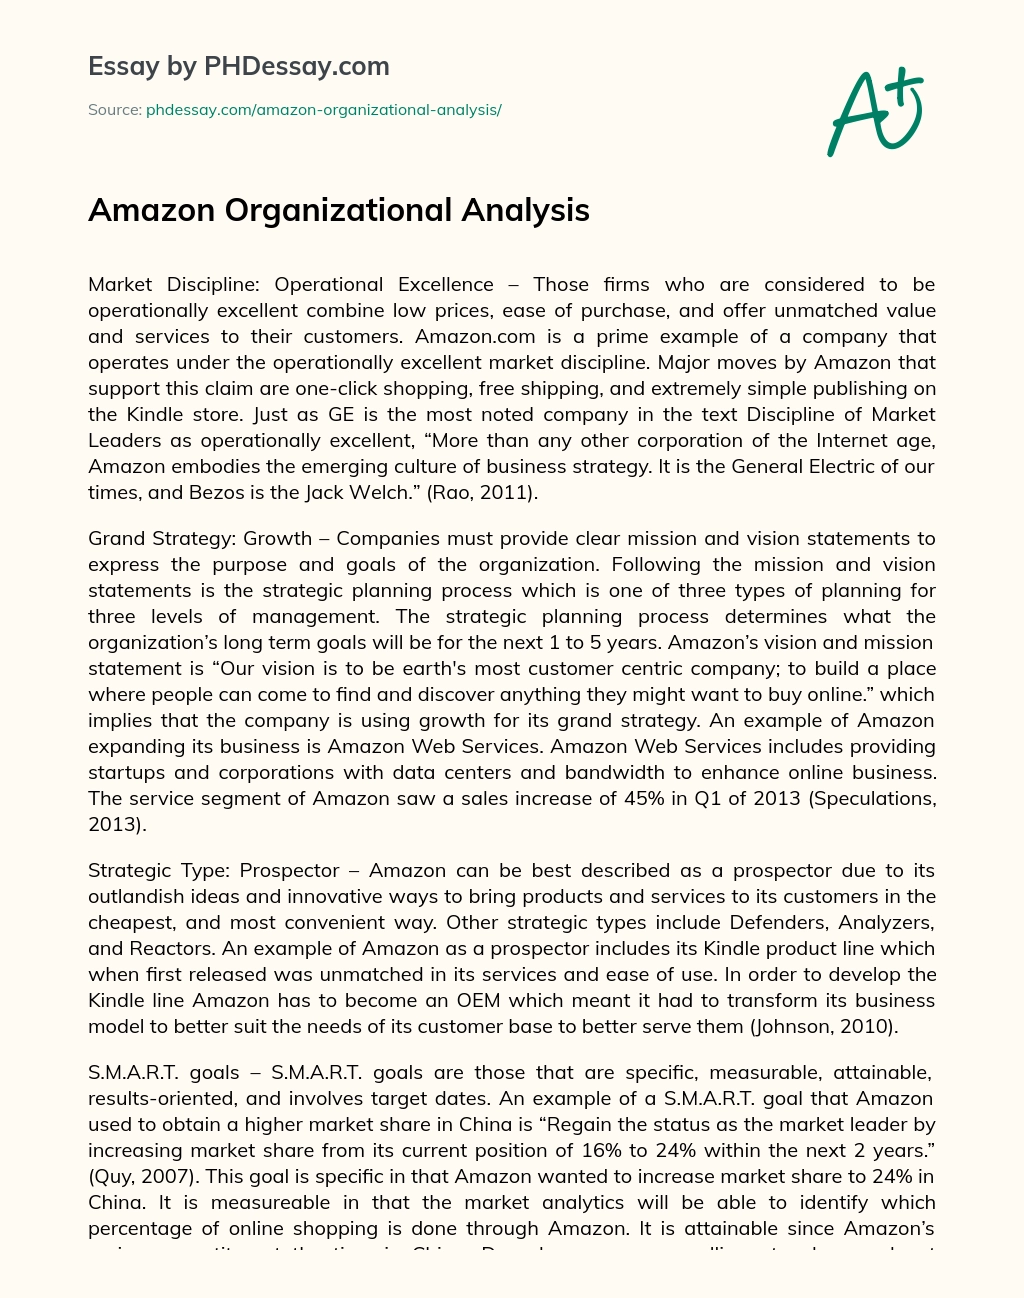 Amazon Organizational Analysis essay